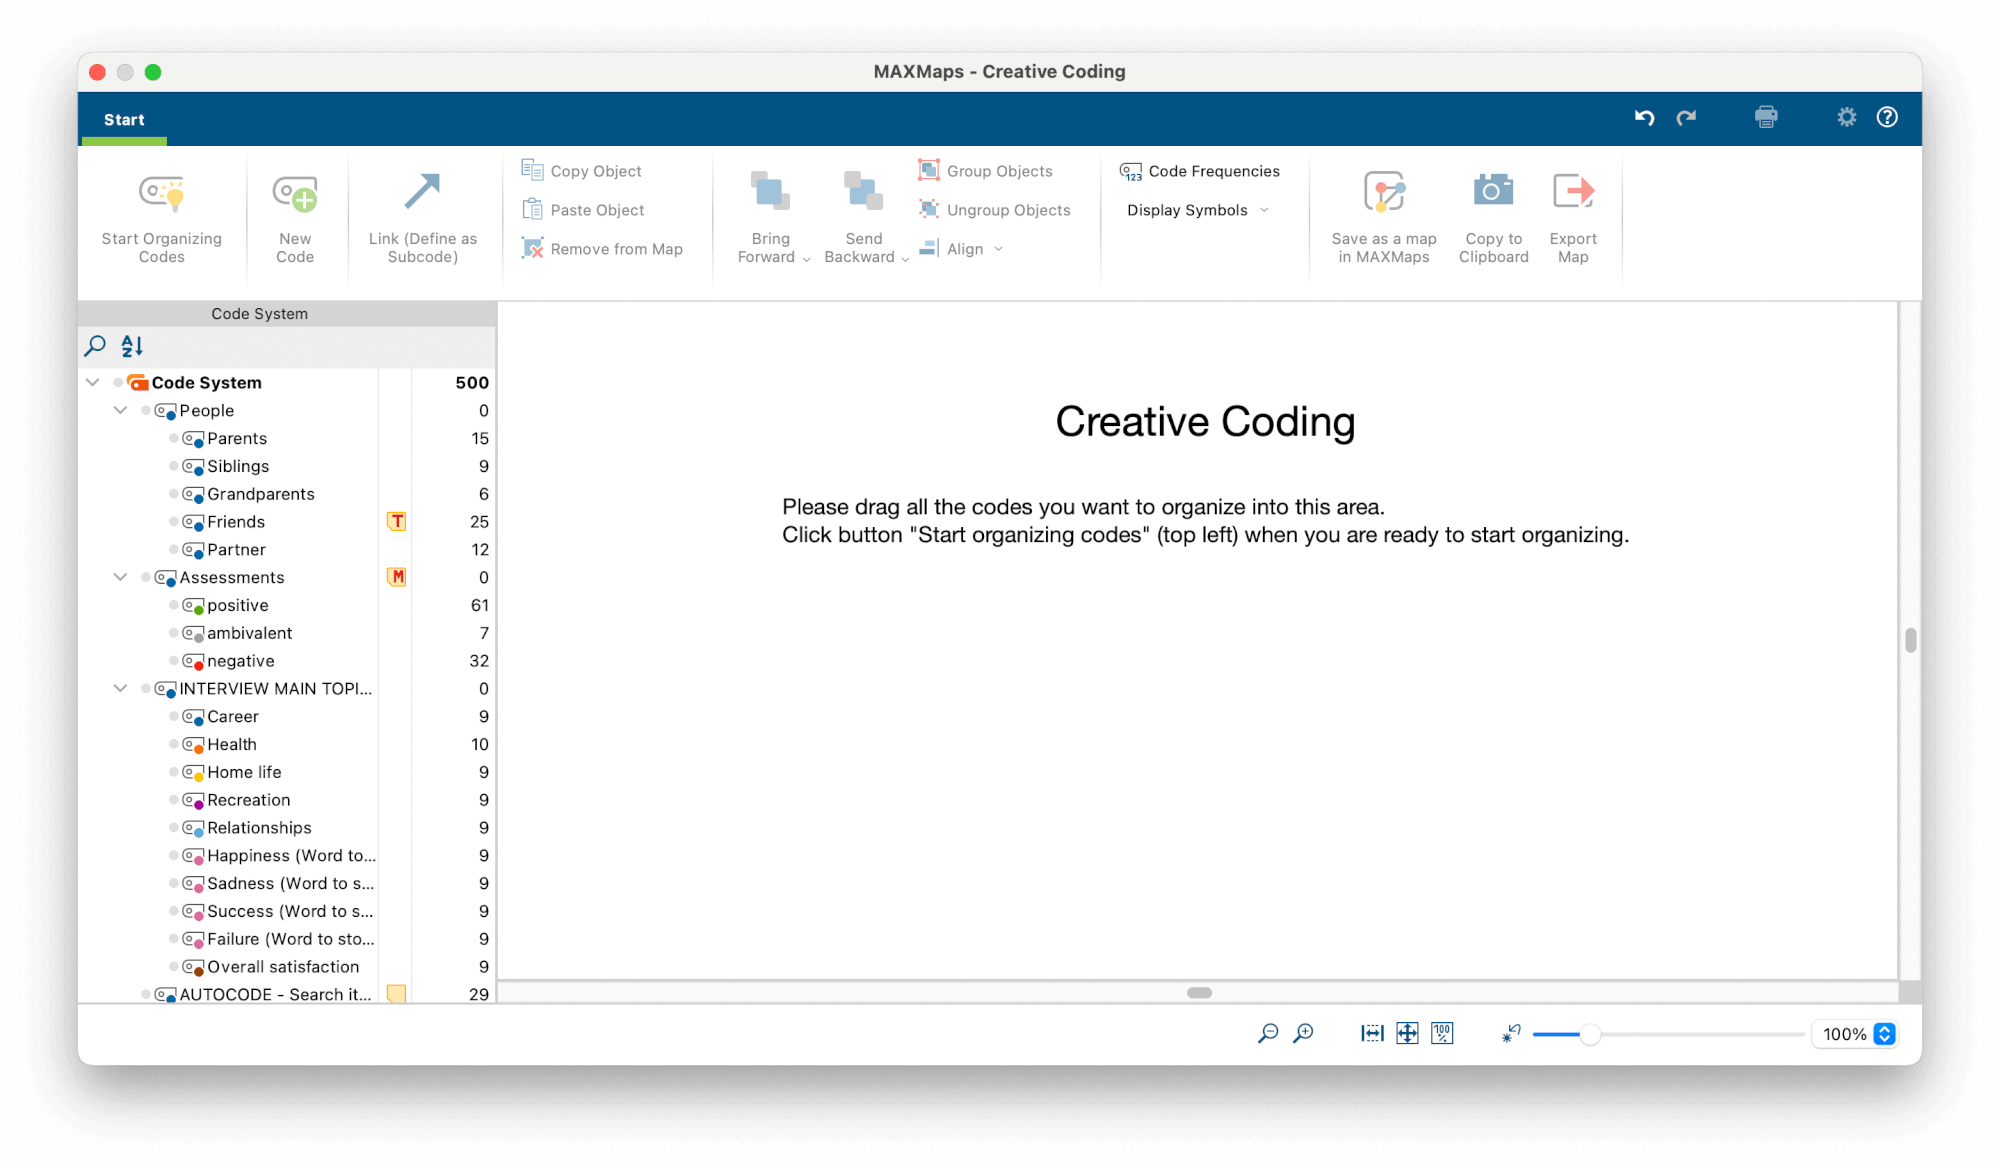 Screenshot from MAXQDA2020 showing the Creative Coding window.